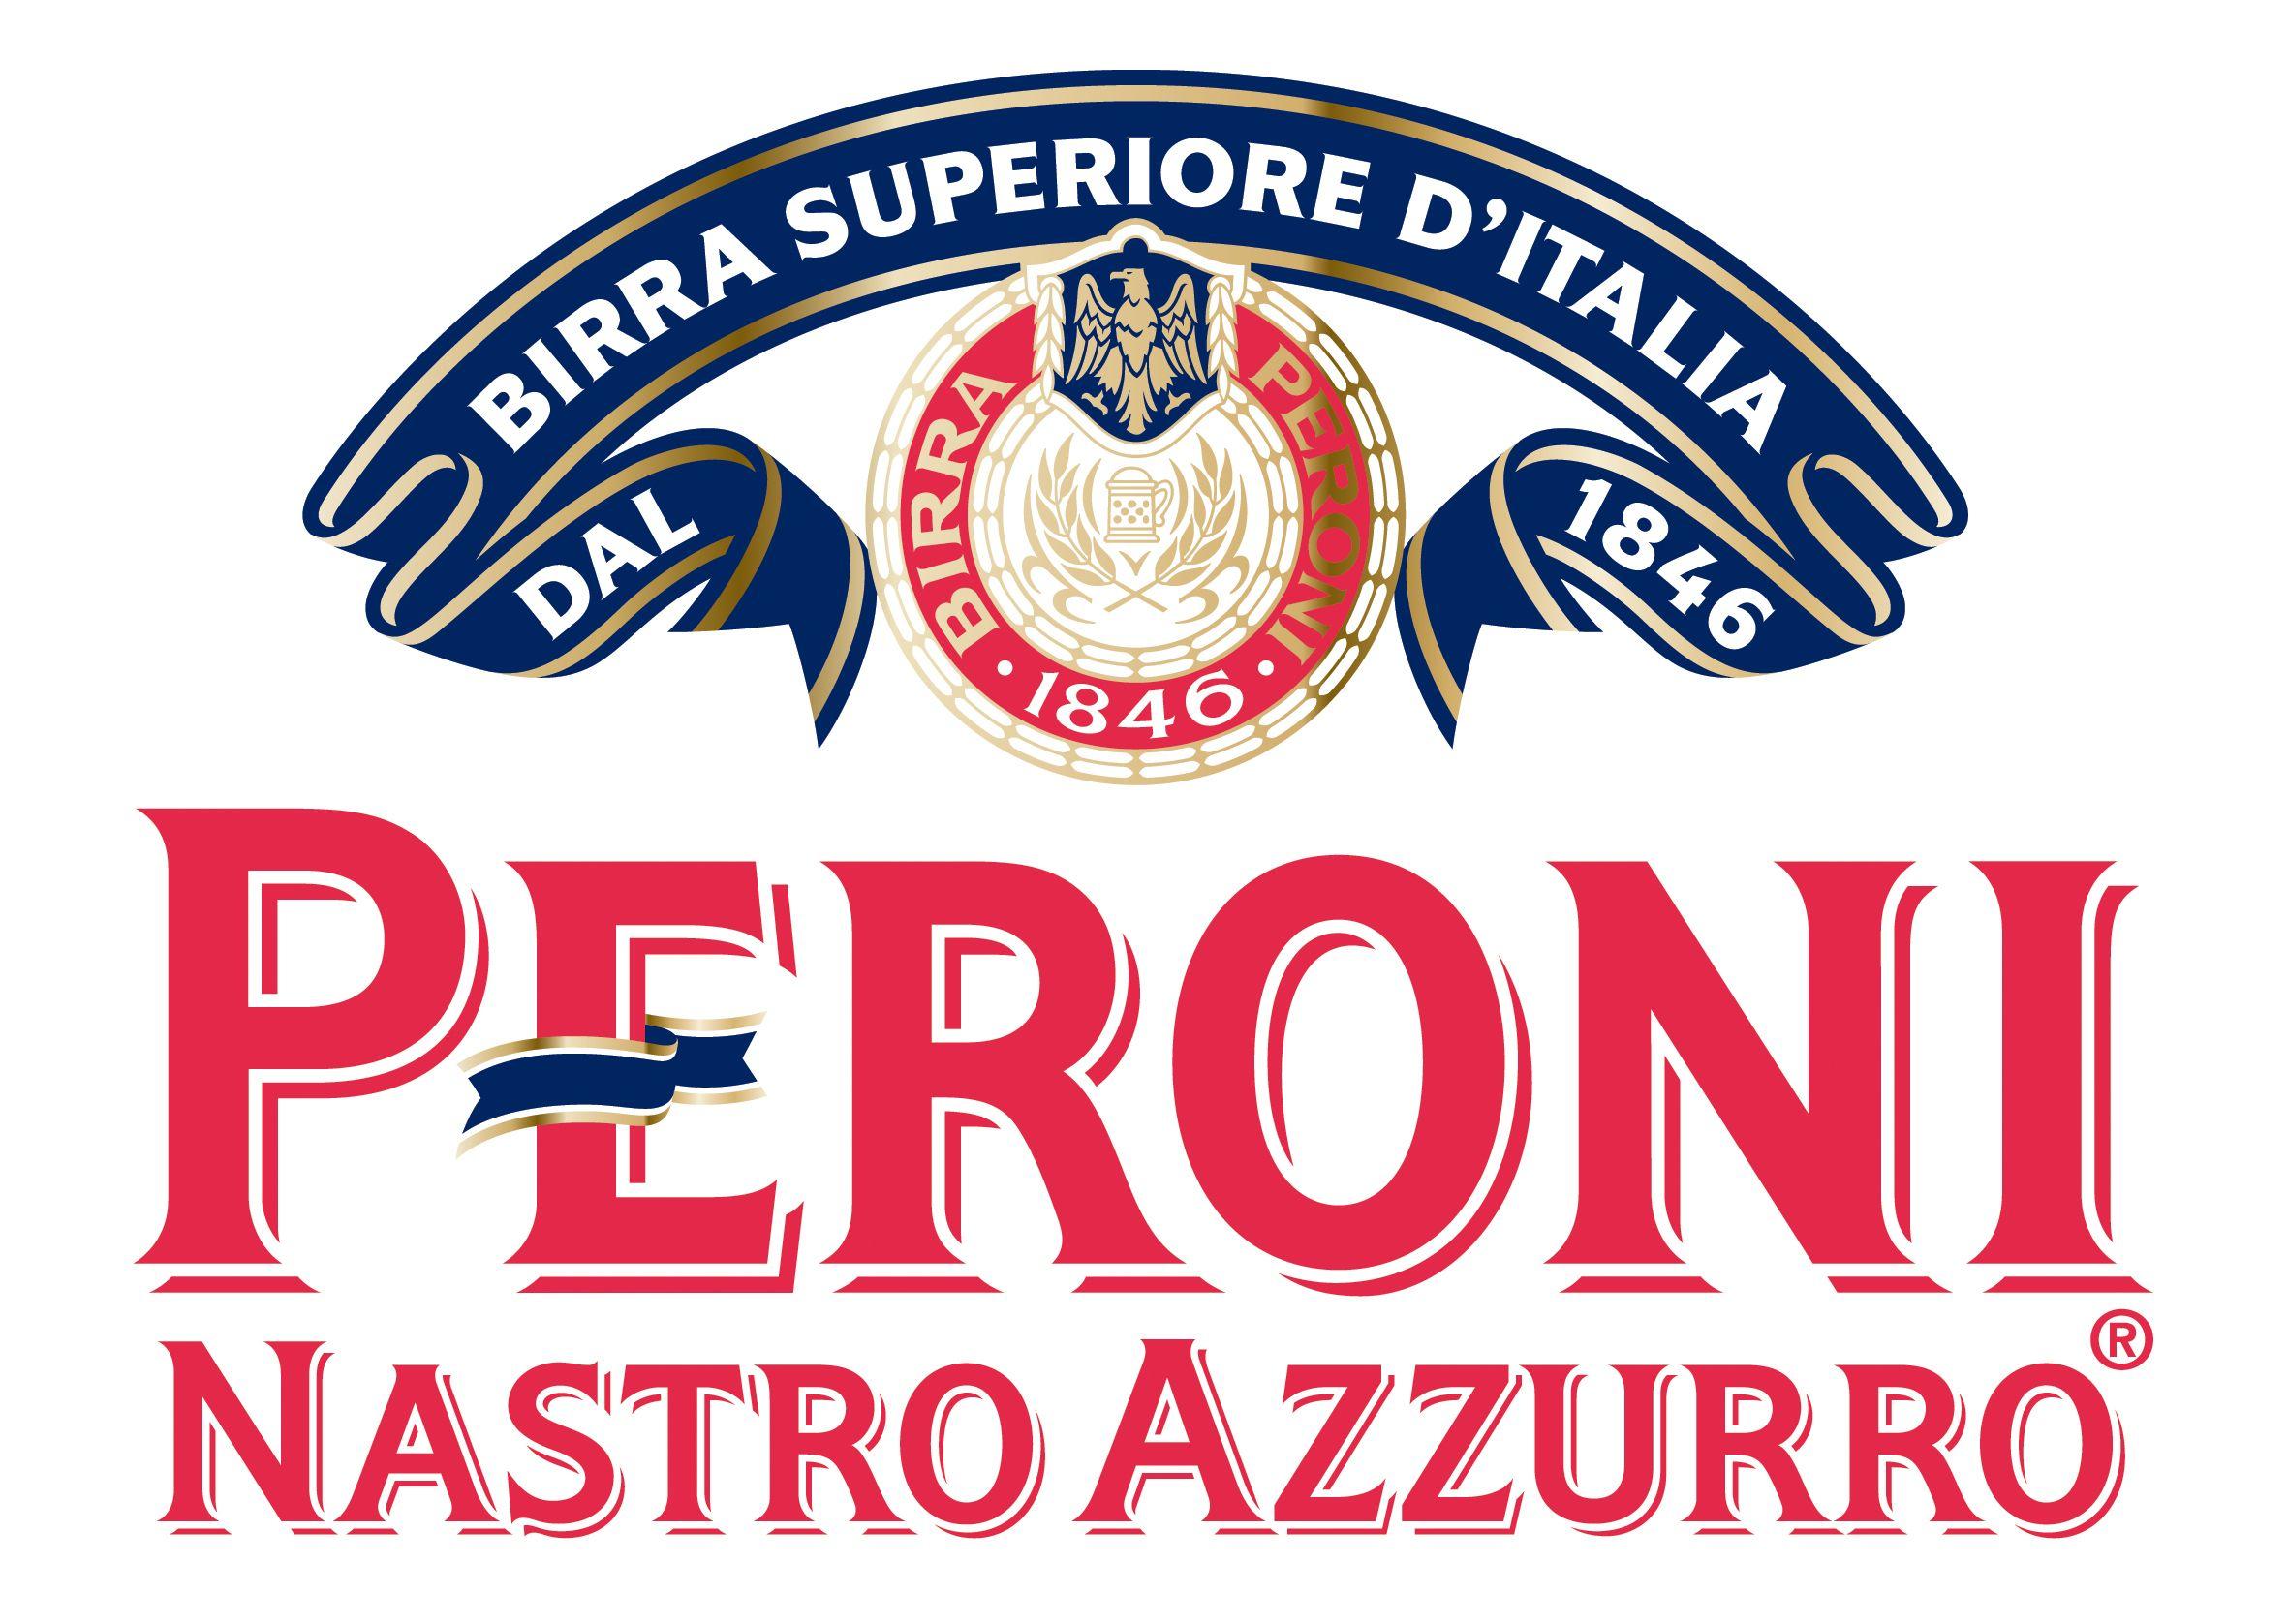 Peroni Logo - peroni nastro azzurro. Beer Labels & Logos. Beer, Beer signs, Beer